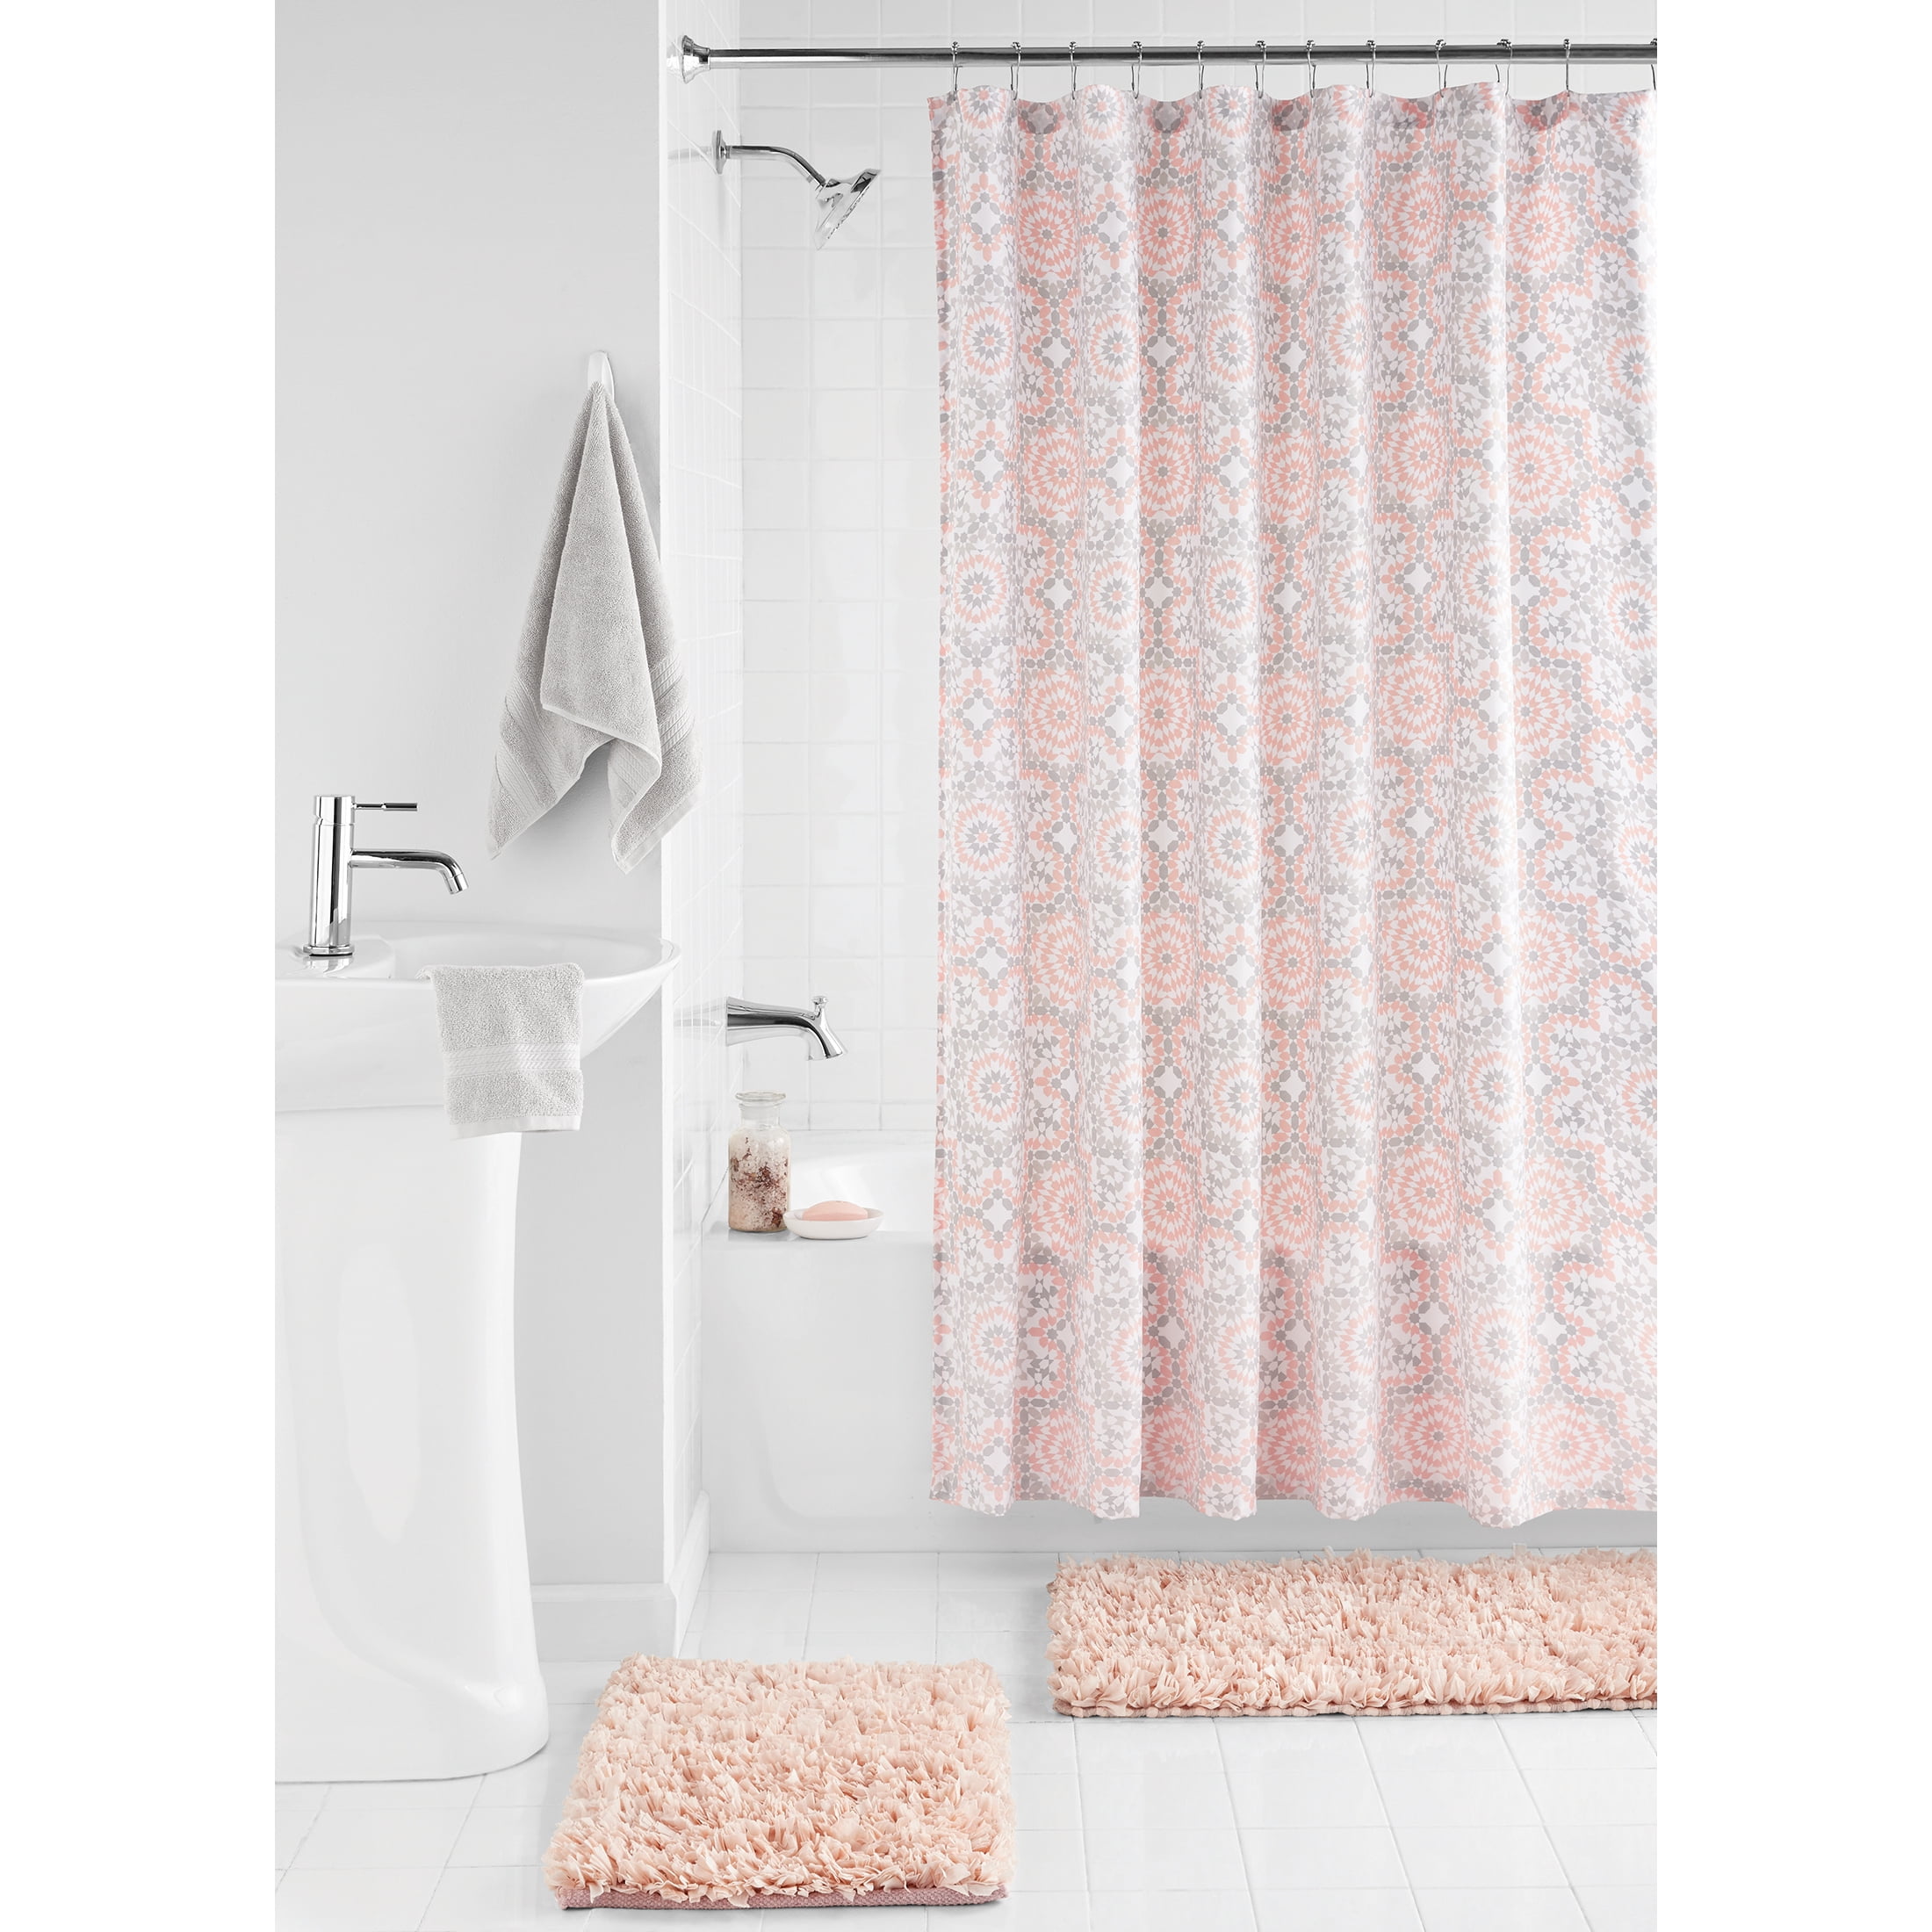 Black White Fabric Shower Curtain Liner Polyester Bath Mat Bathroom Decor Set 